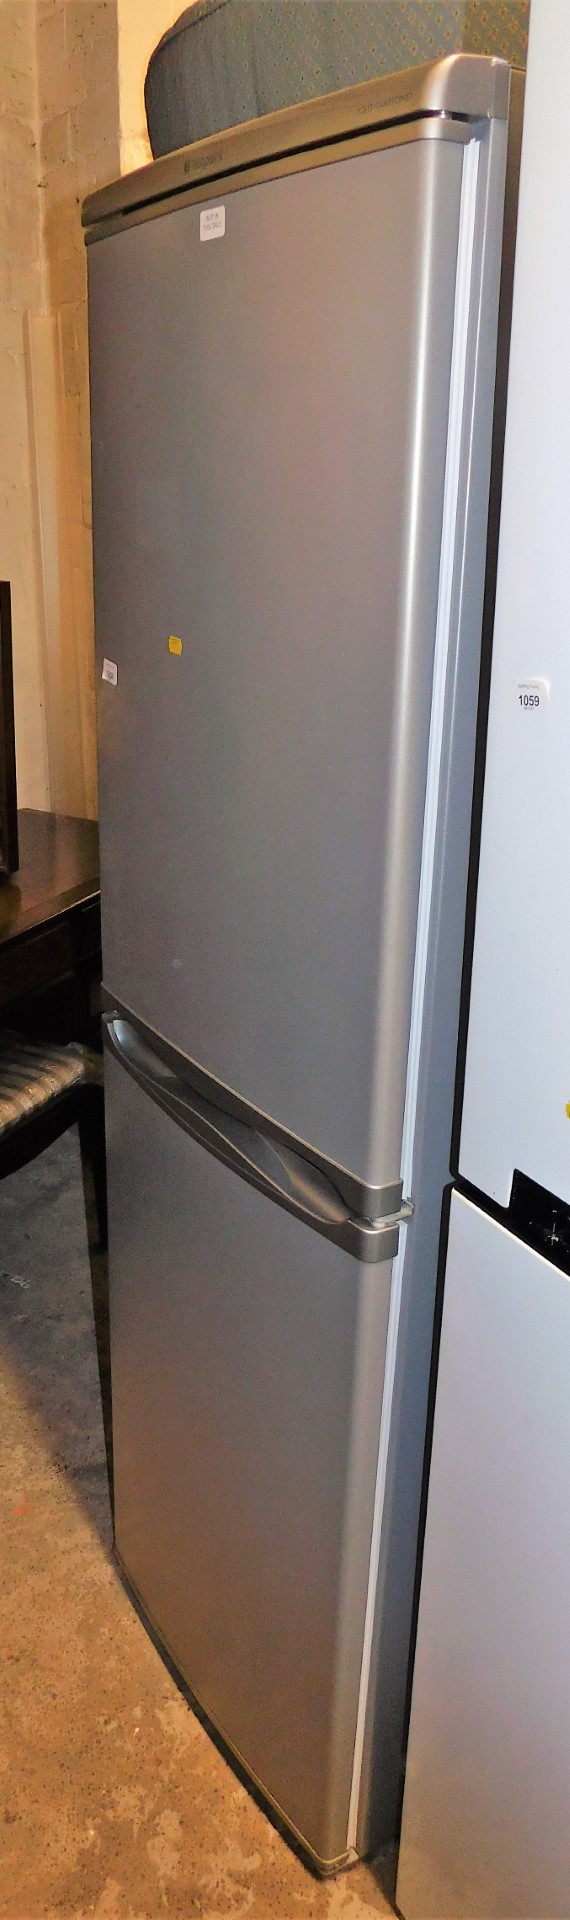 A Hotpoint Iced Diamond fridge freezer, RFA52.